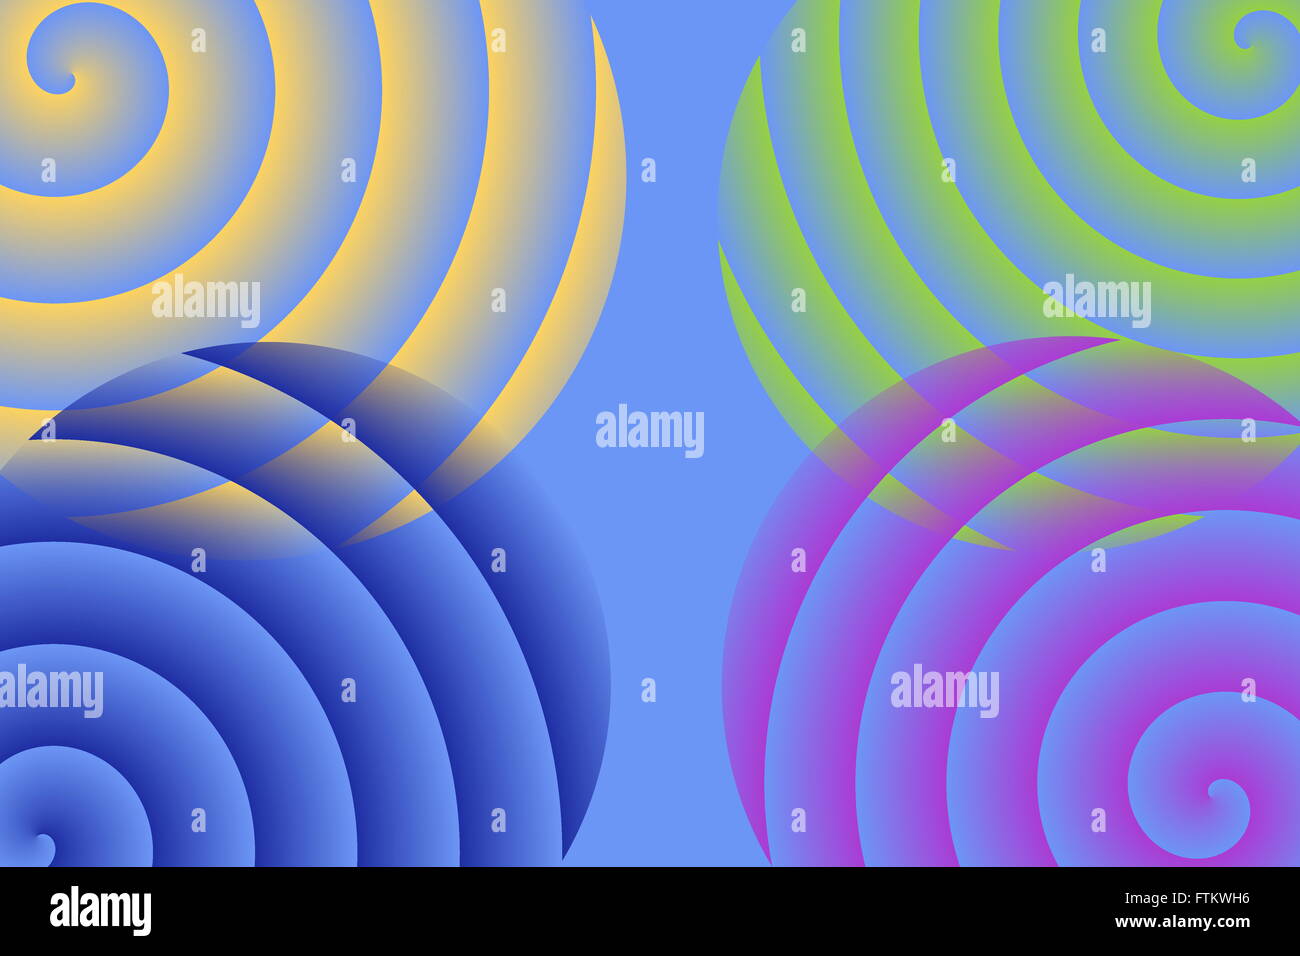 Quatre spirales en jaune,bleu,vert et violet Banque D'Images